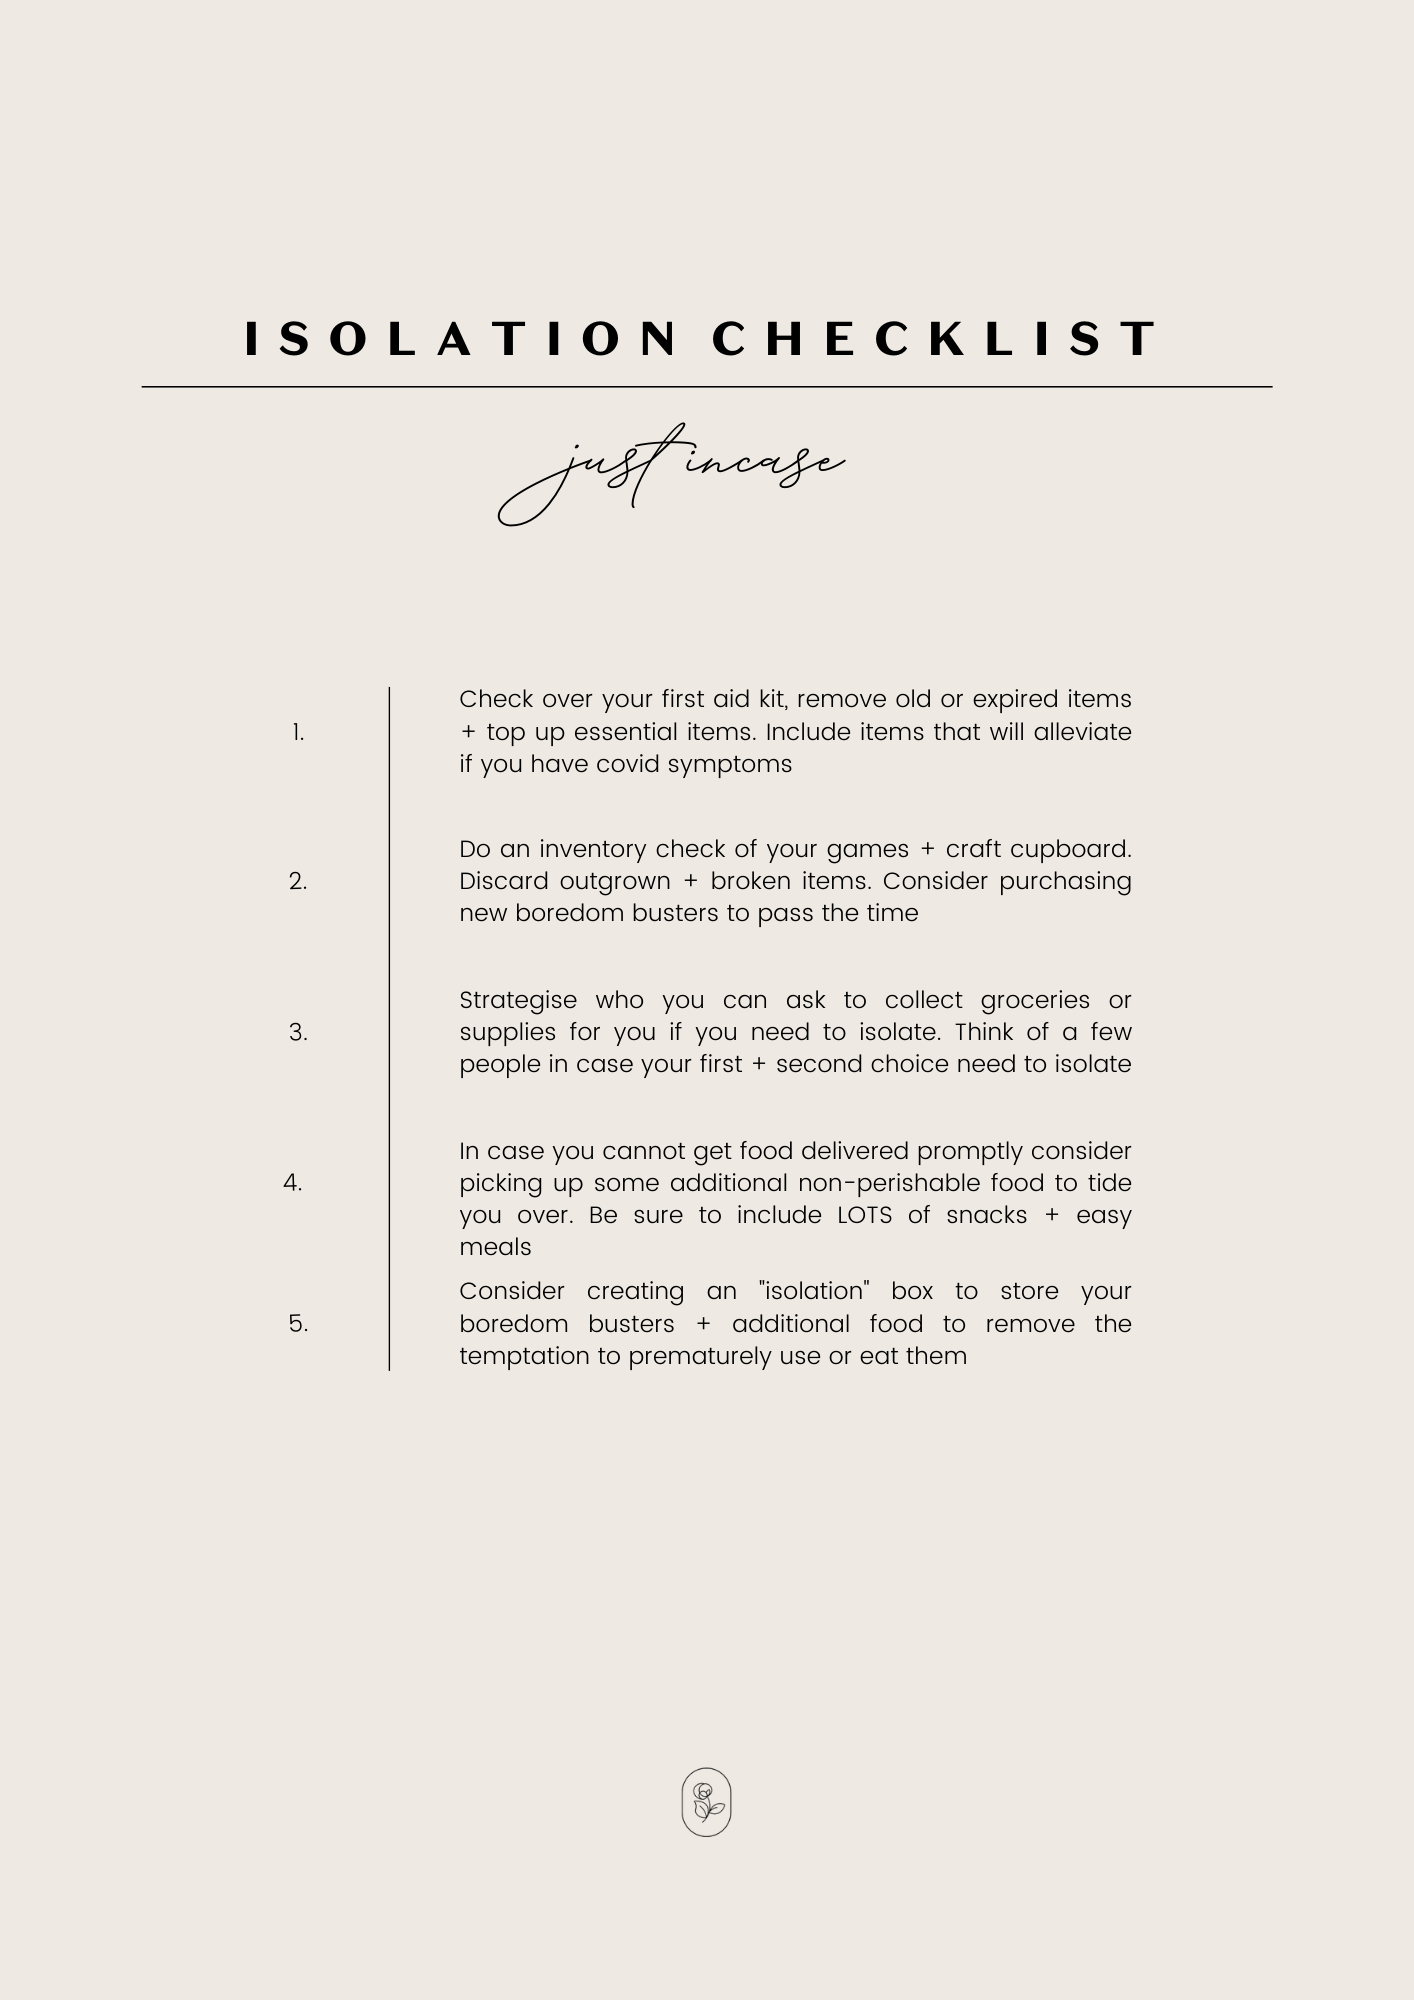 Covid Home Isolation Checklist by Lila Jasmine